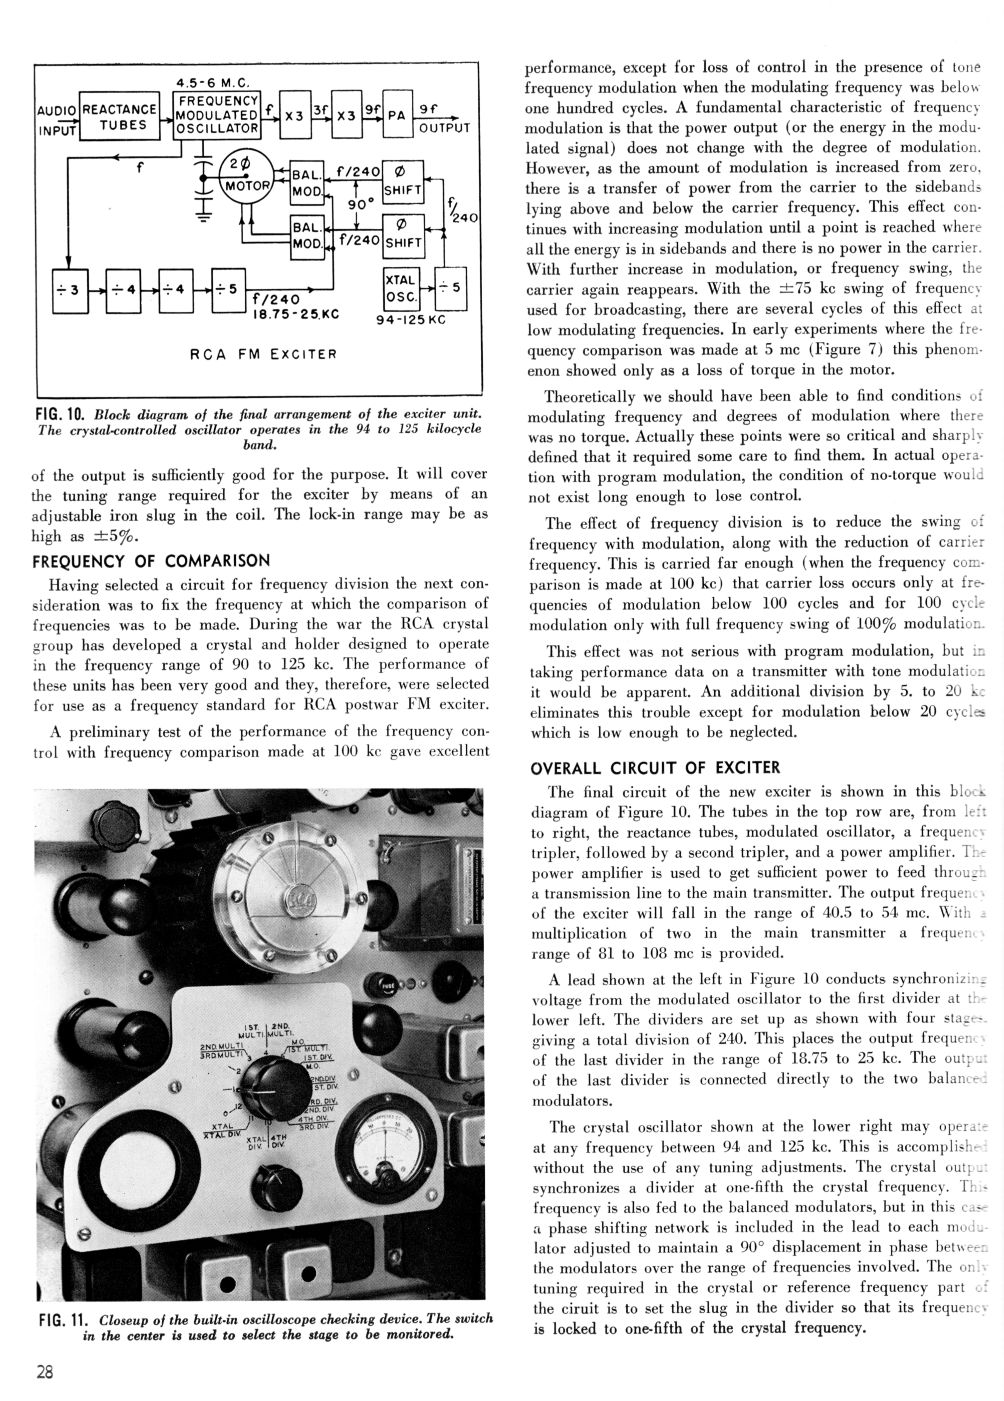 RCA MI-7015 Direct FM Exciter, page 5